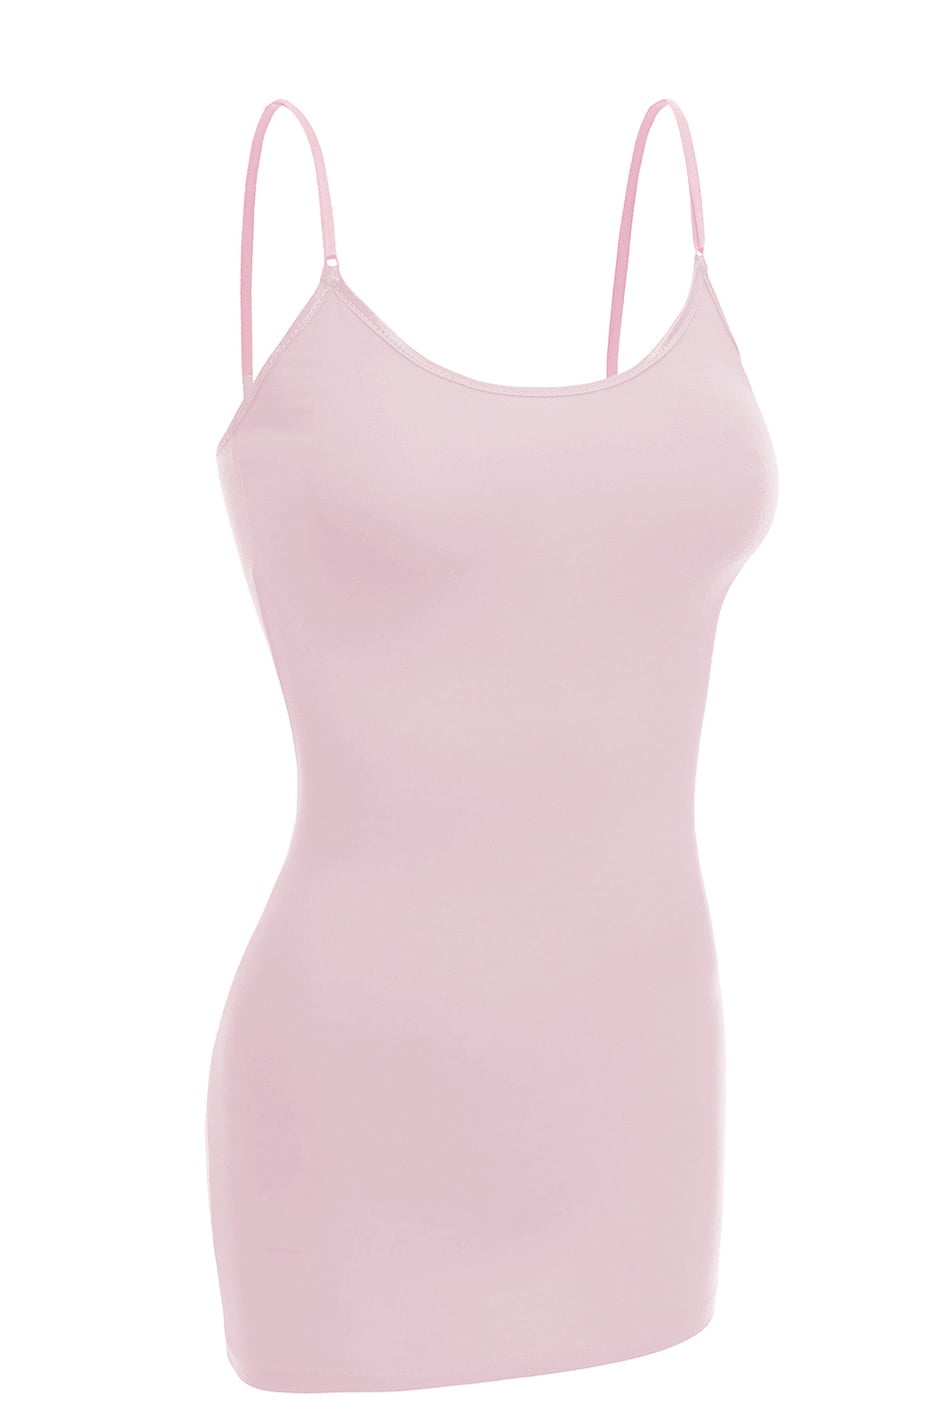 Essential Basic Women Basic Built In Bra Spaghetti Strap Cami Top Tank -  Light Pink, L